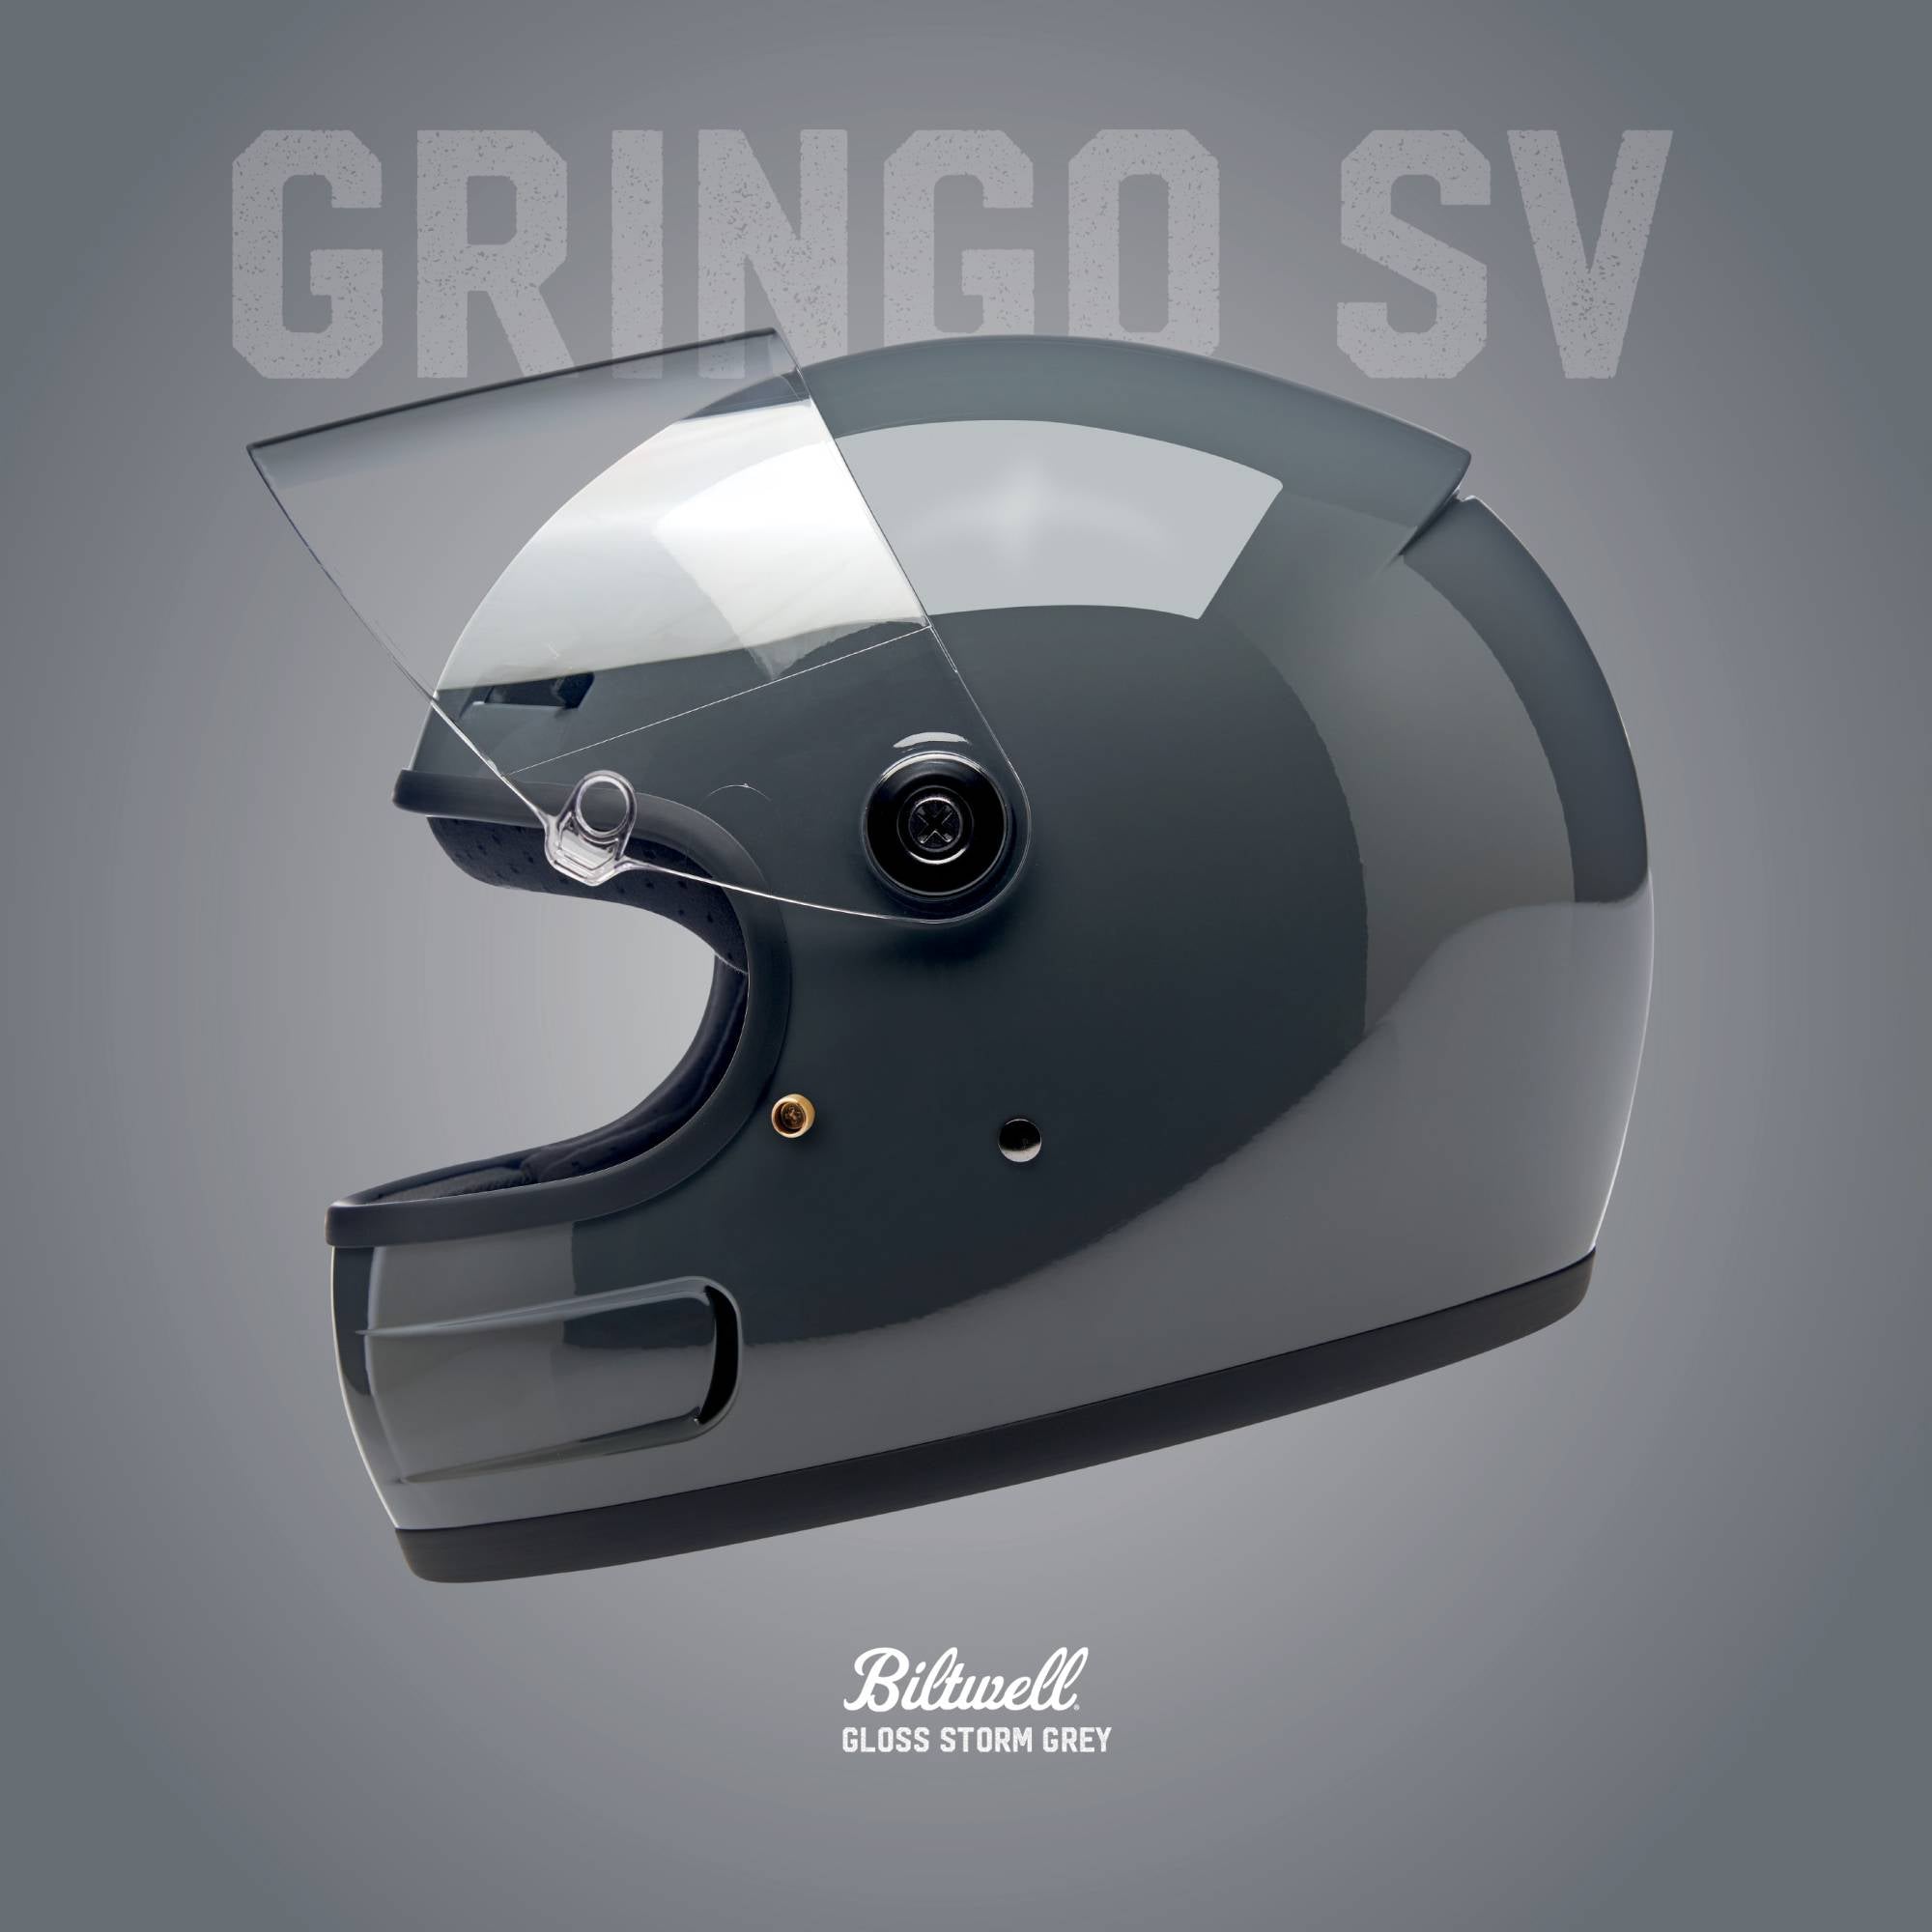 Gringo SV Helmet Gloss Storm Grey